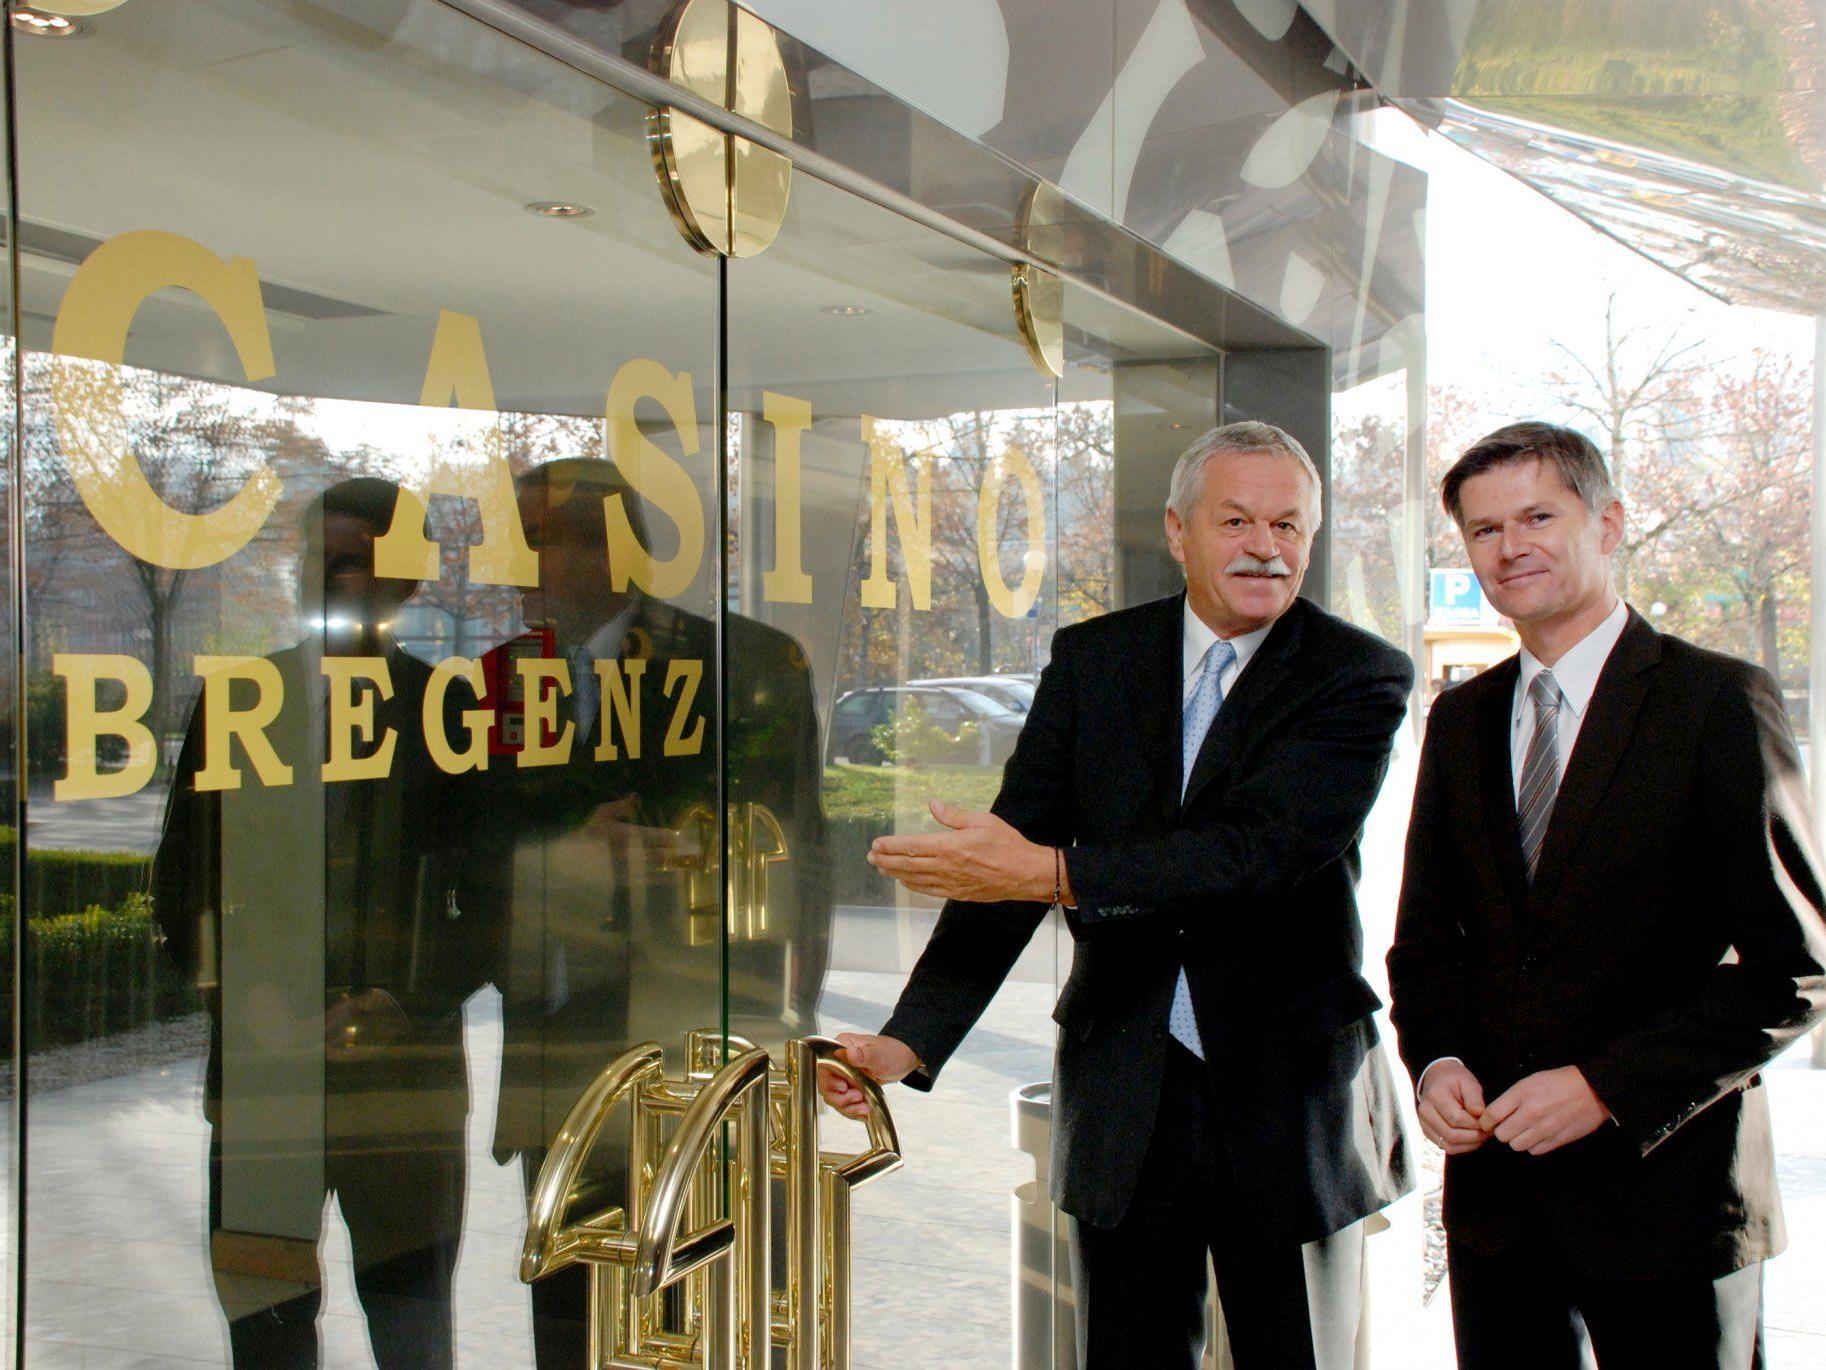 Casino-Direktor Josef Semler übergibt per 1.1.2012 die Geschäfte an seinen Nachfolger Bernhard Moosbrugger.